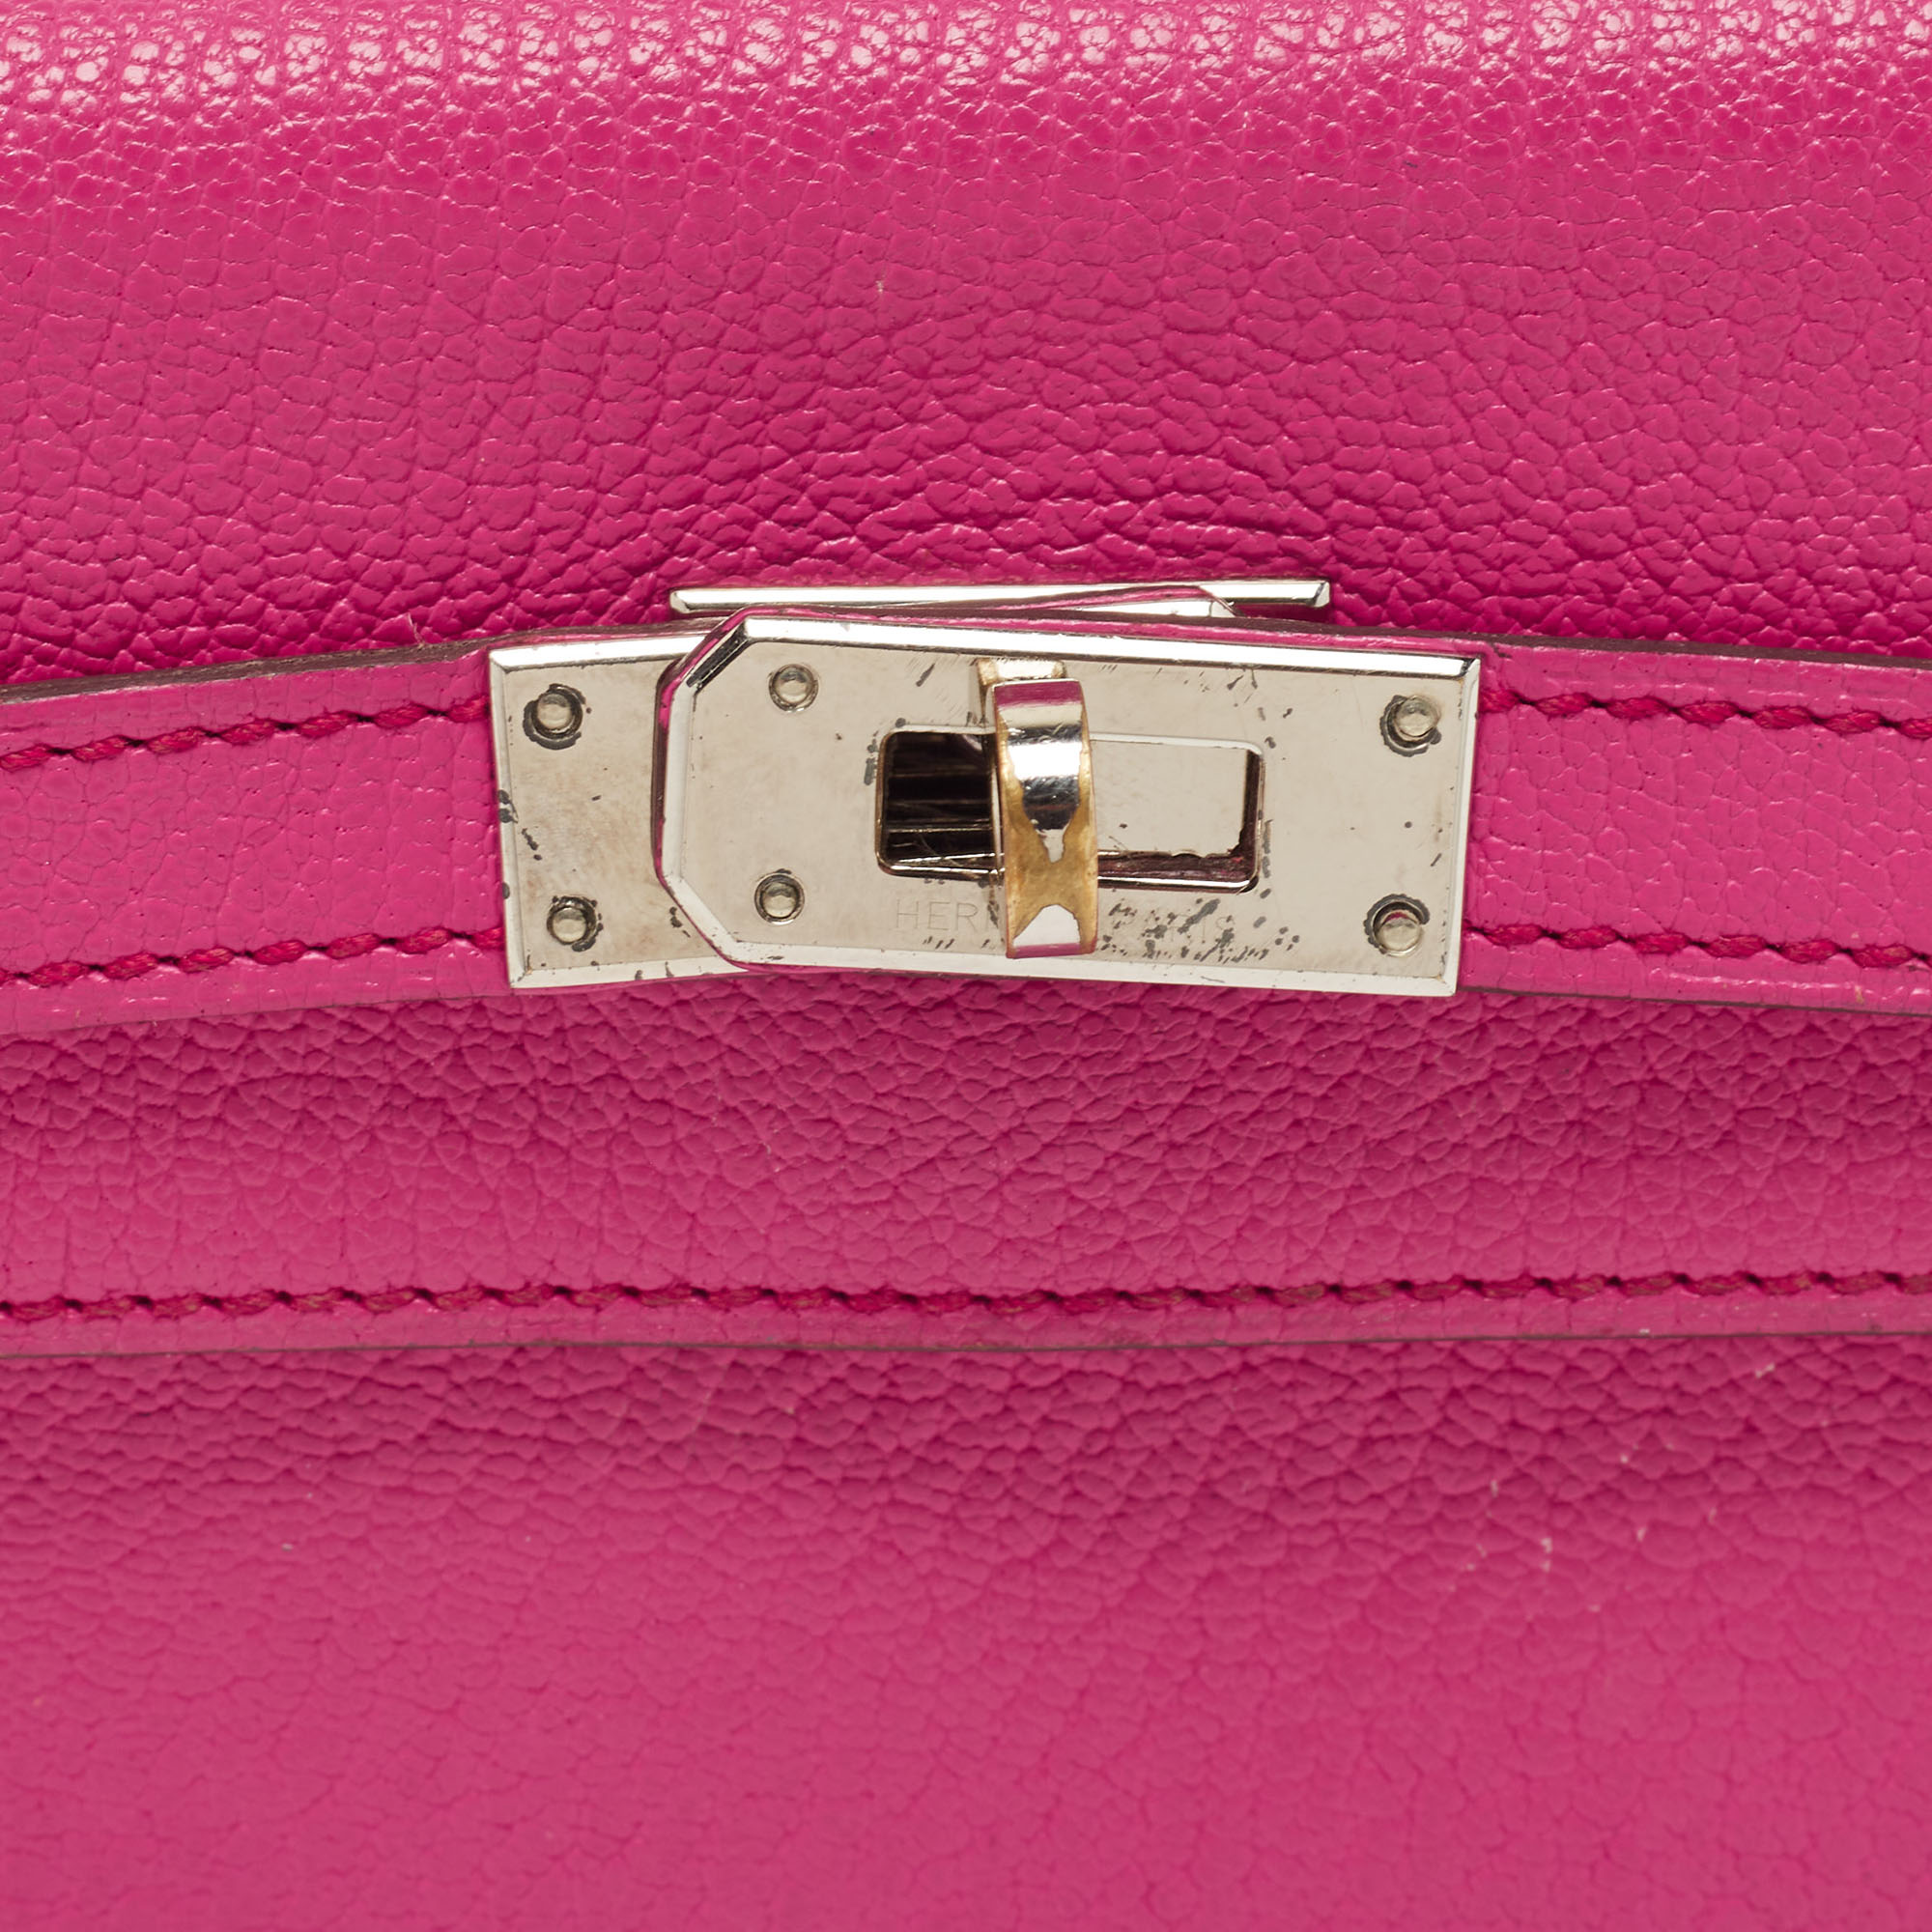 Hermes Rose Shocking Chevre Leather Kelly Depliant Wallet